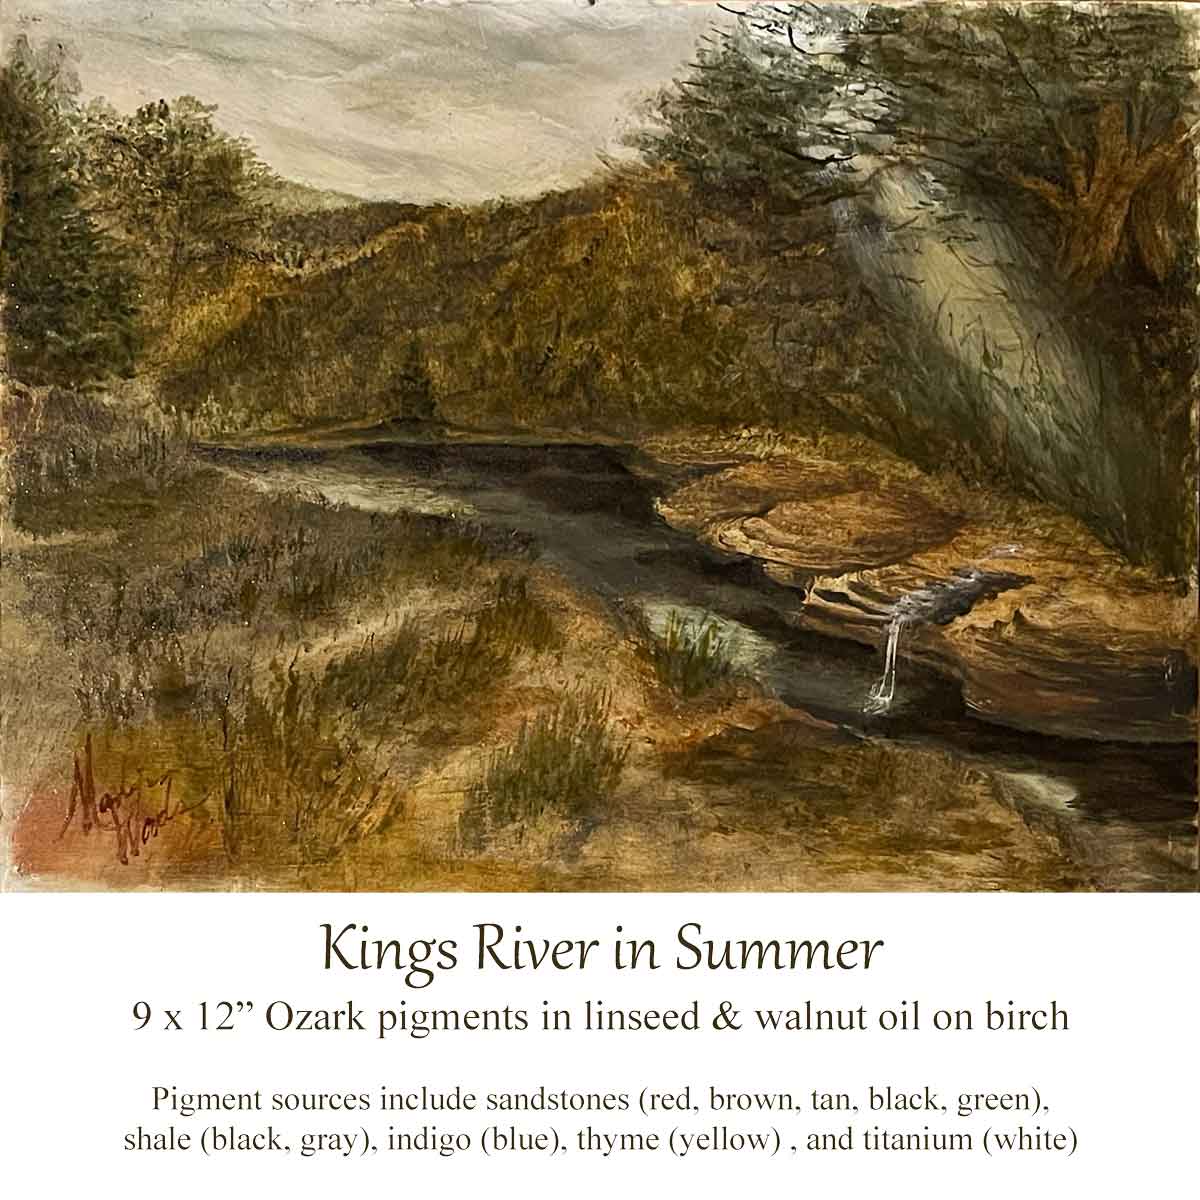 Kings River in Summer | Ozark Pigments in Oils